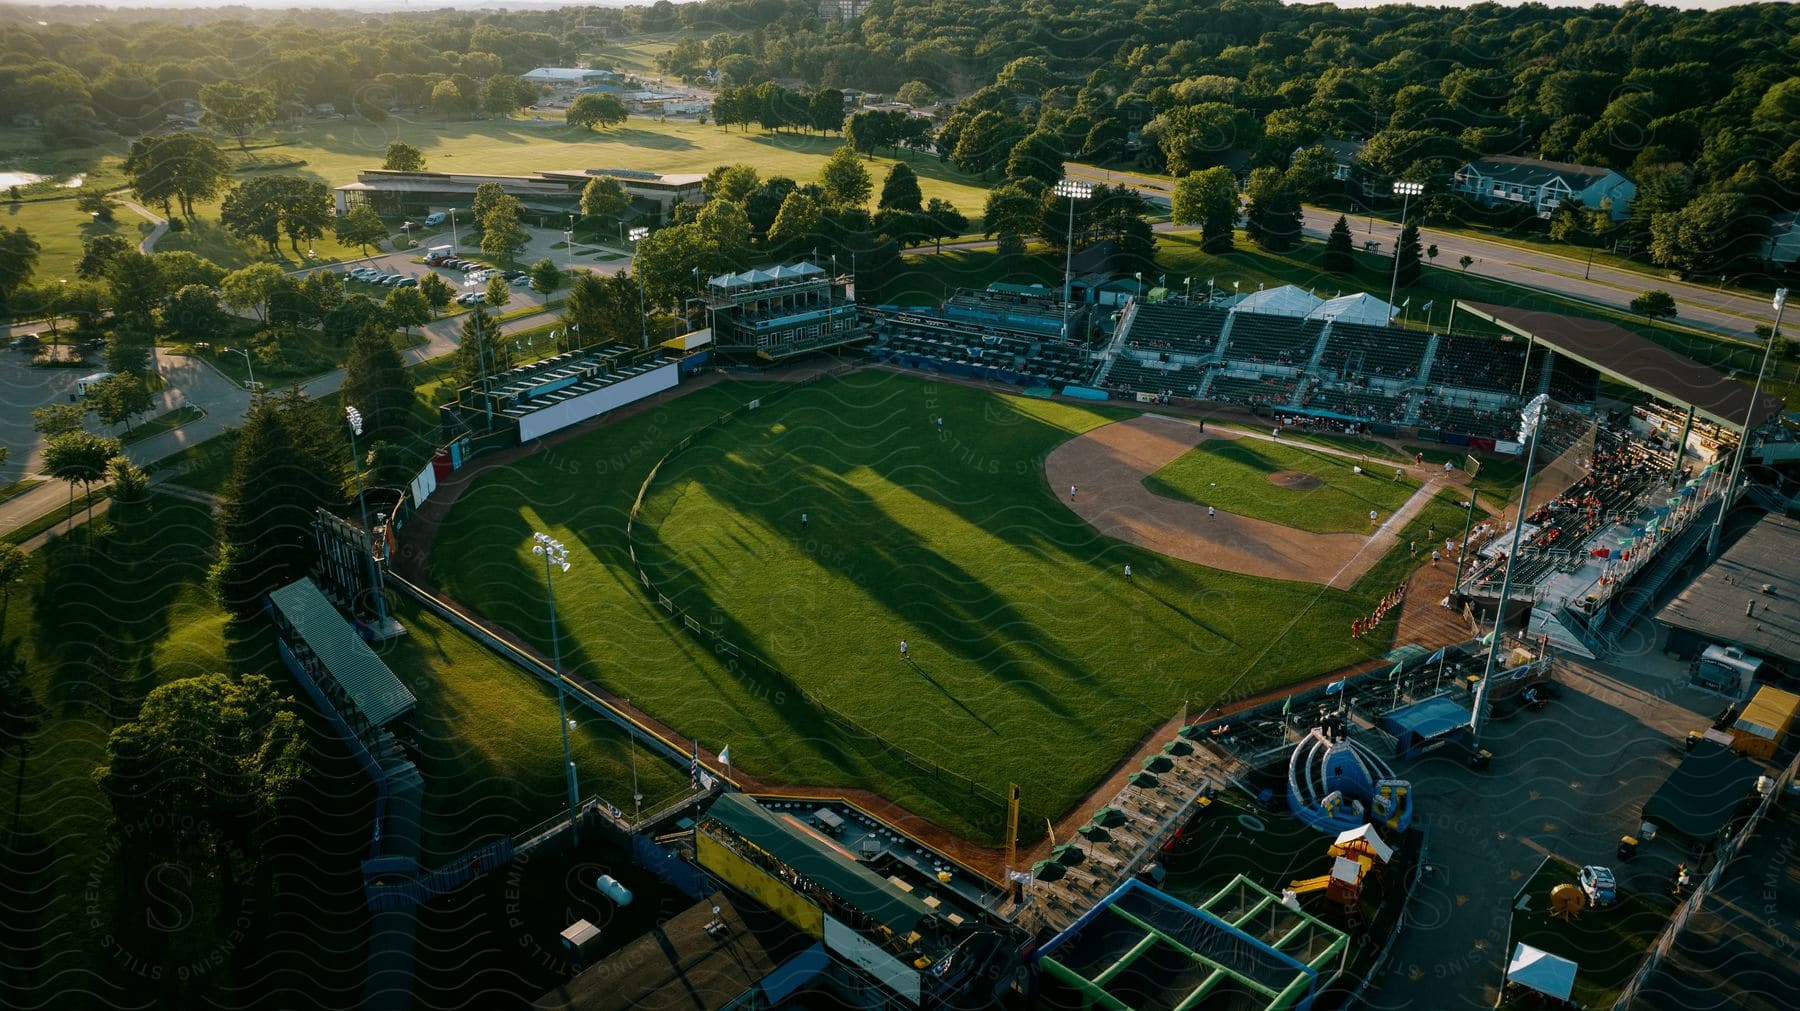 An aerial view of a baseball field